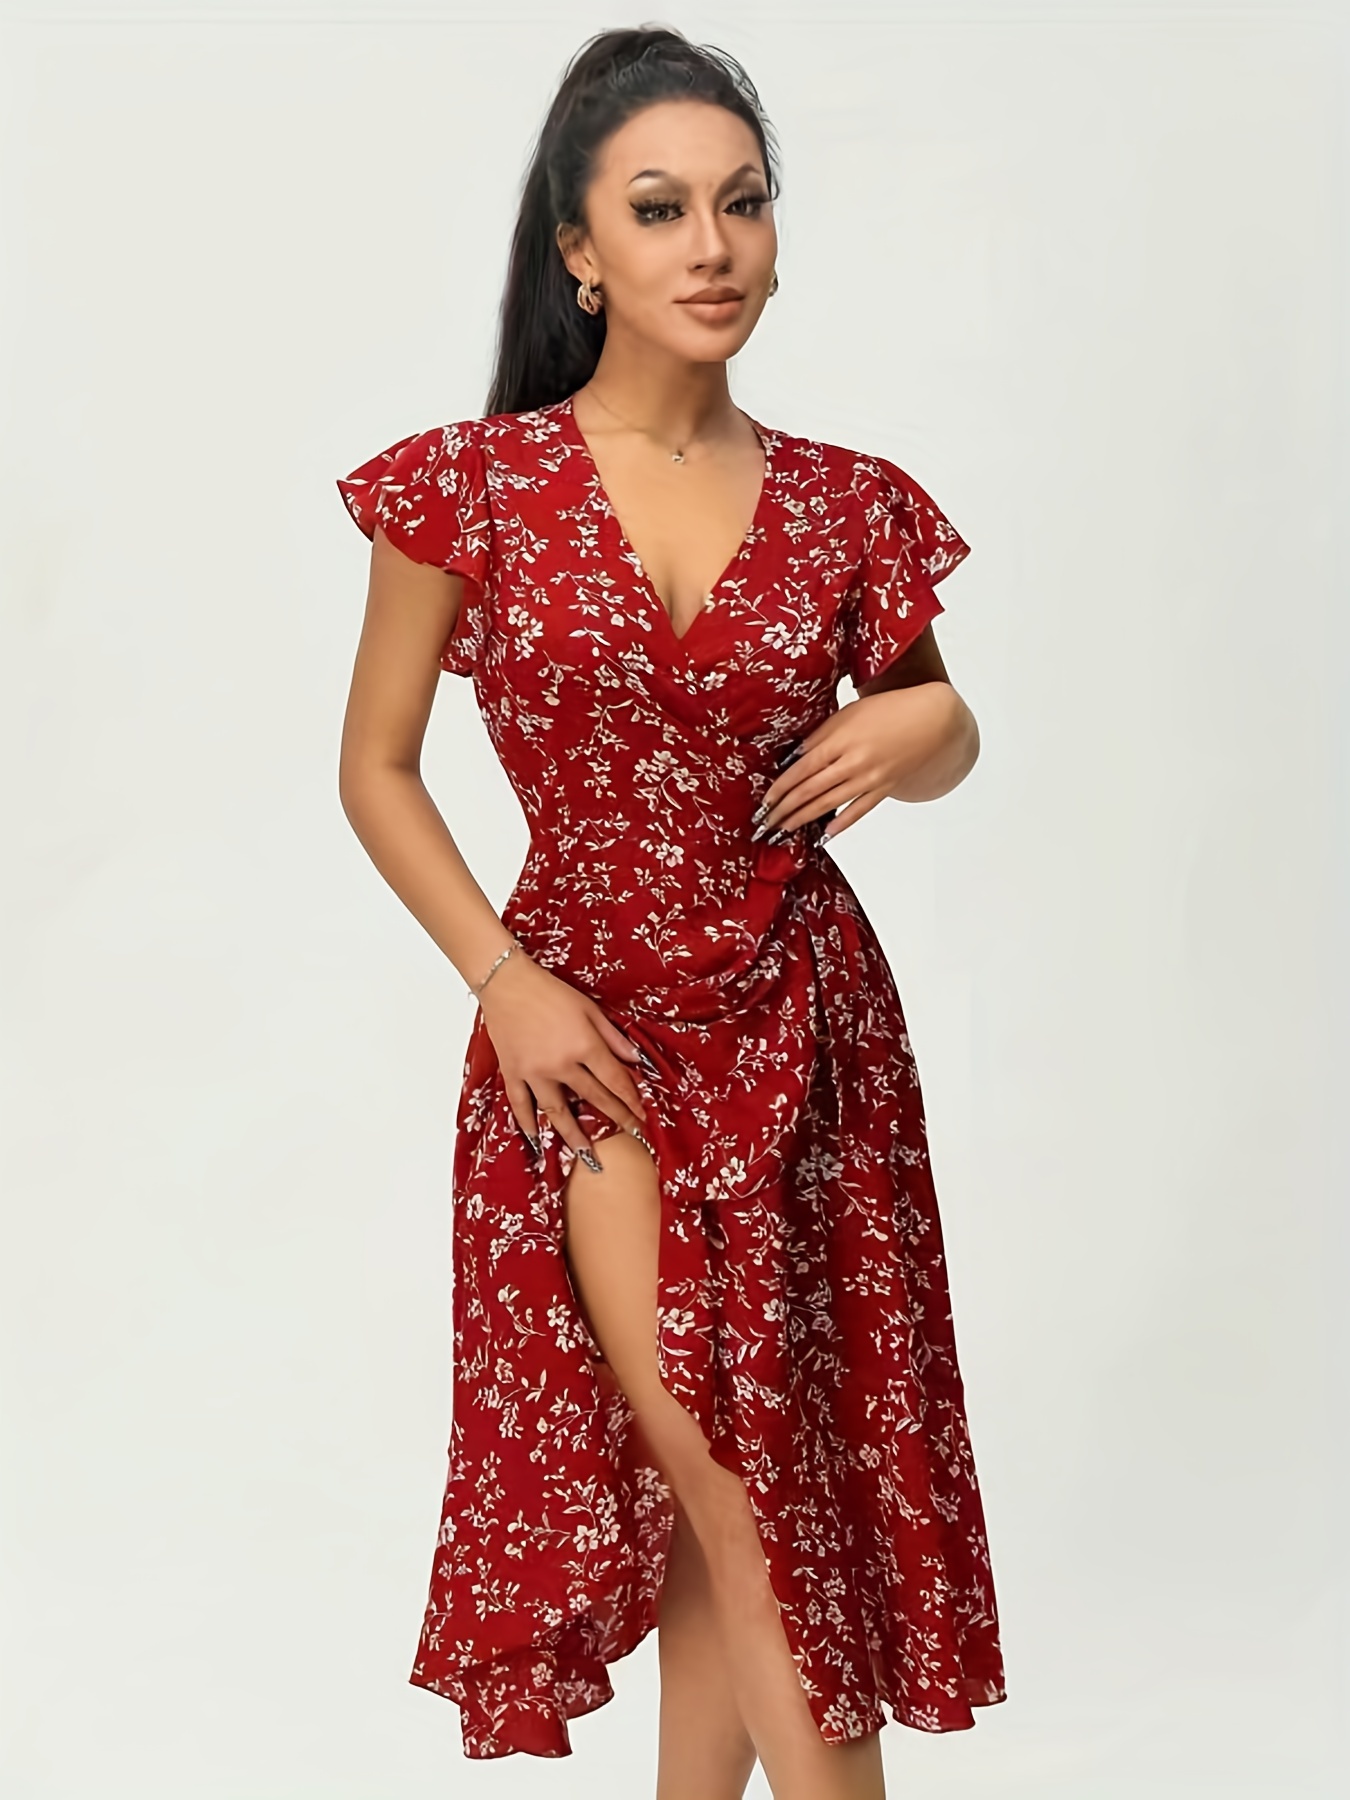 QIPOPIQ Clearance Women's Summer Dress Short Sleeve V-Neck Midi Floral  Print Elegant Dresses 